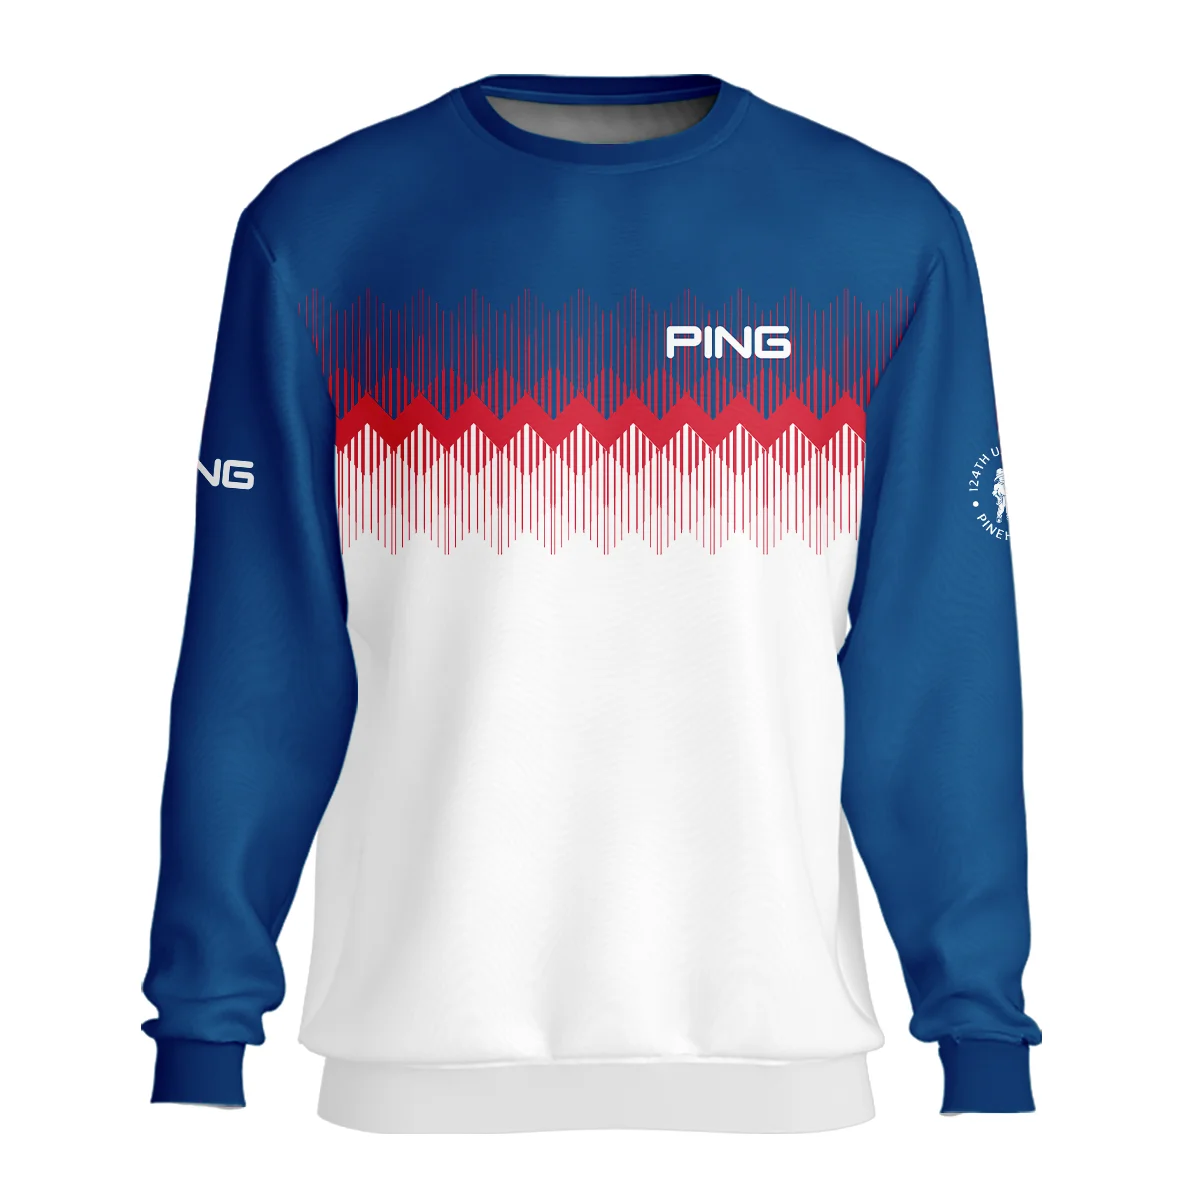 Ping 124th U.S. Open Pinehurst Unisex Sweatshirt Blue Red Fabric Pattern Golf Sweatshirt